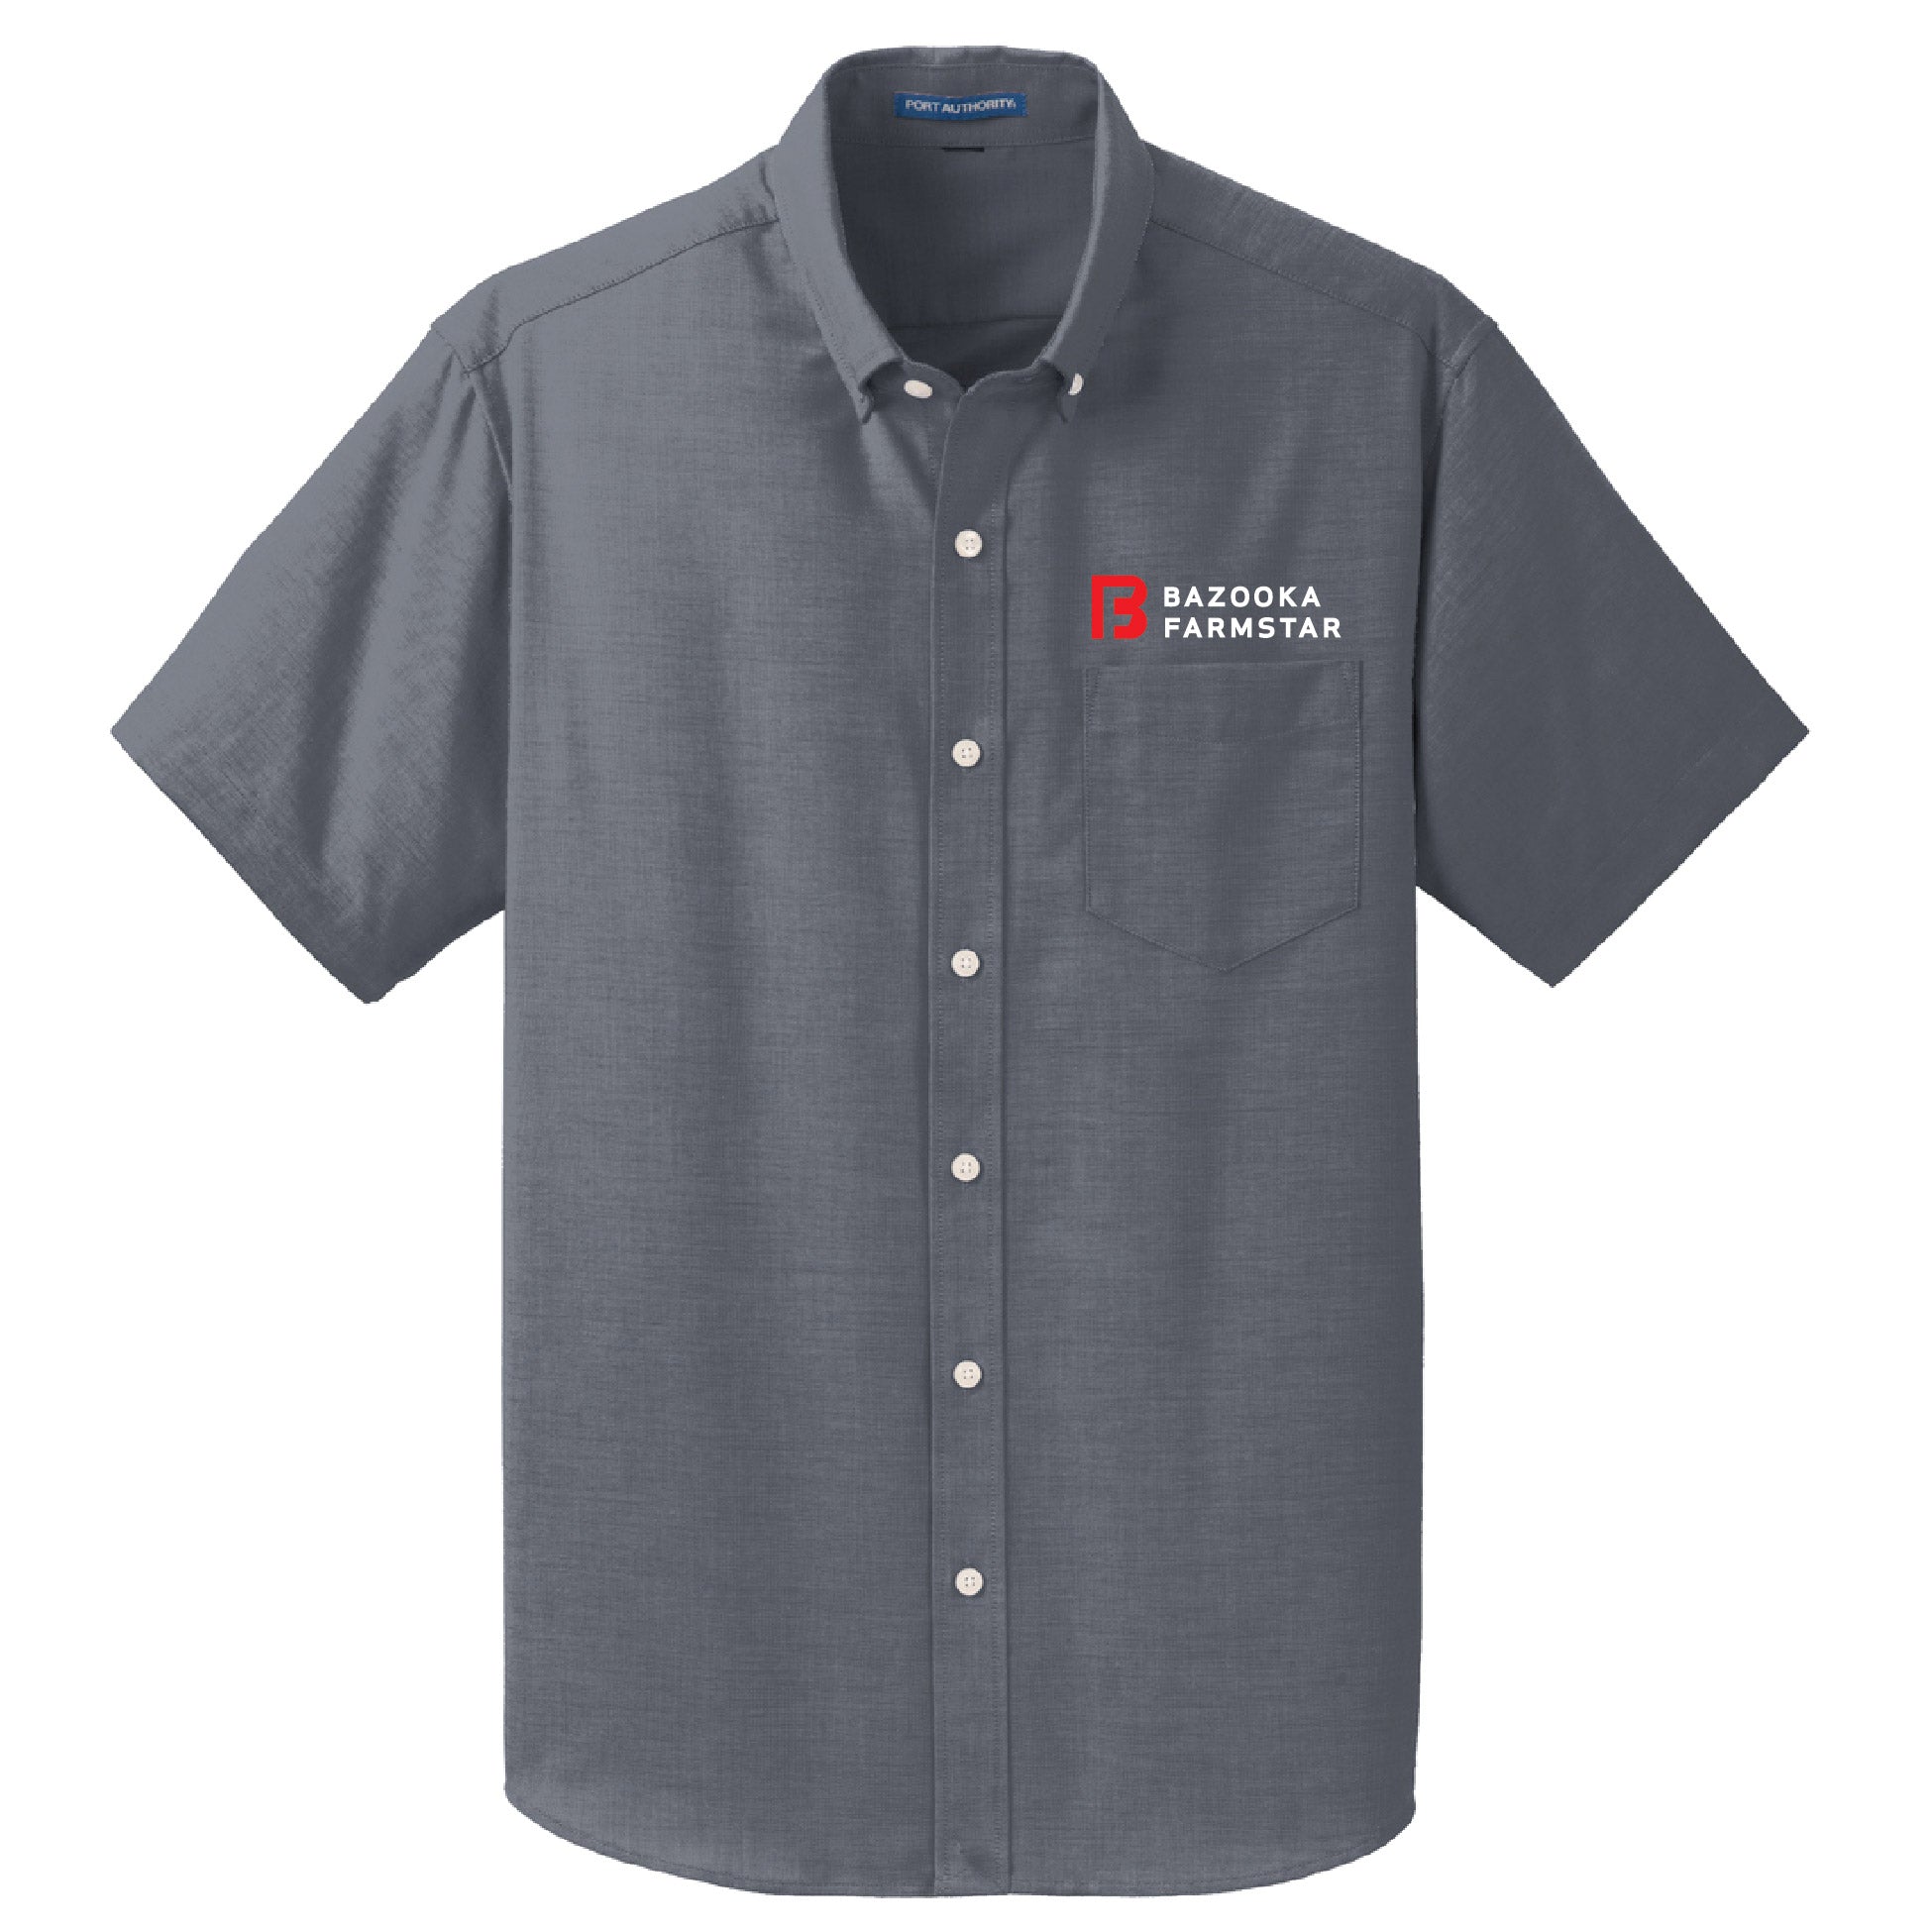 Bazooka Farmstar Short Sleeve Oxford Shirt